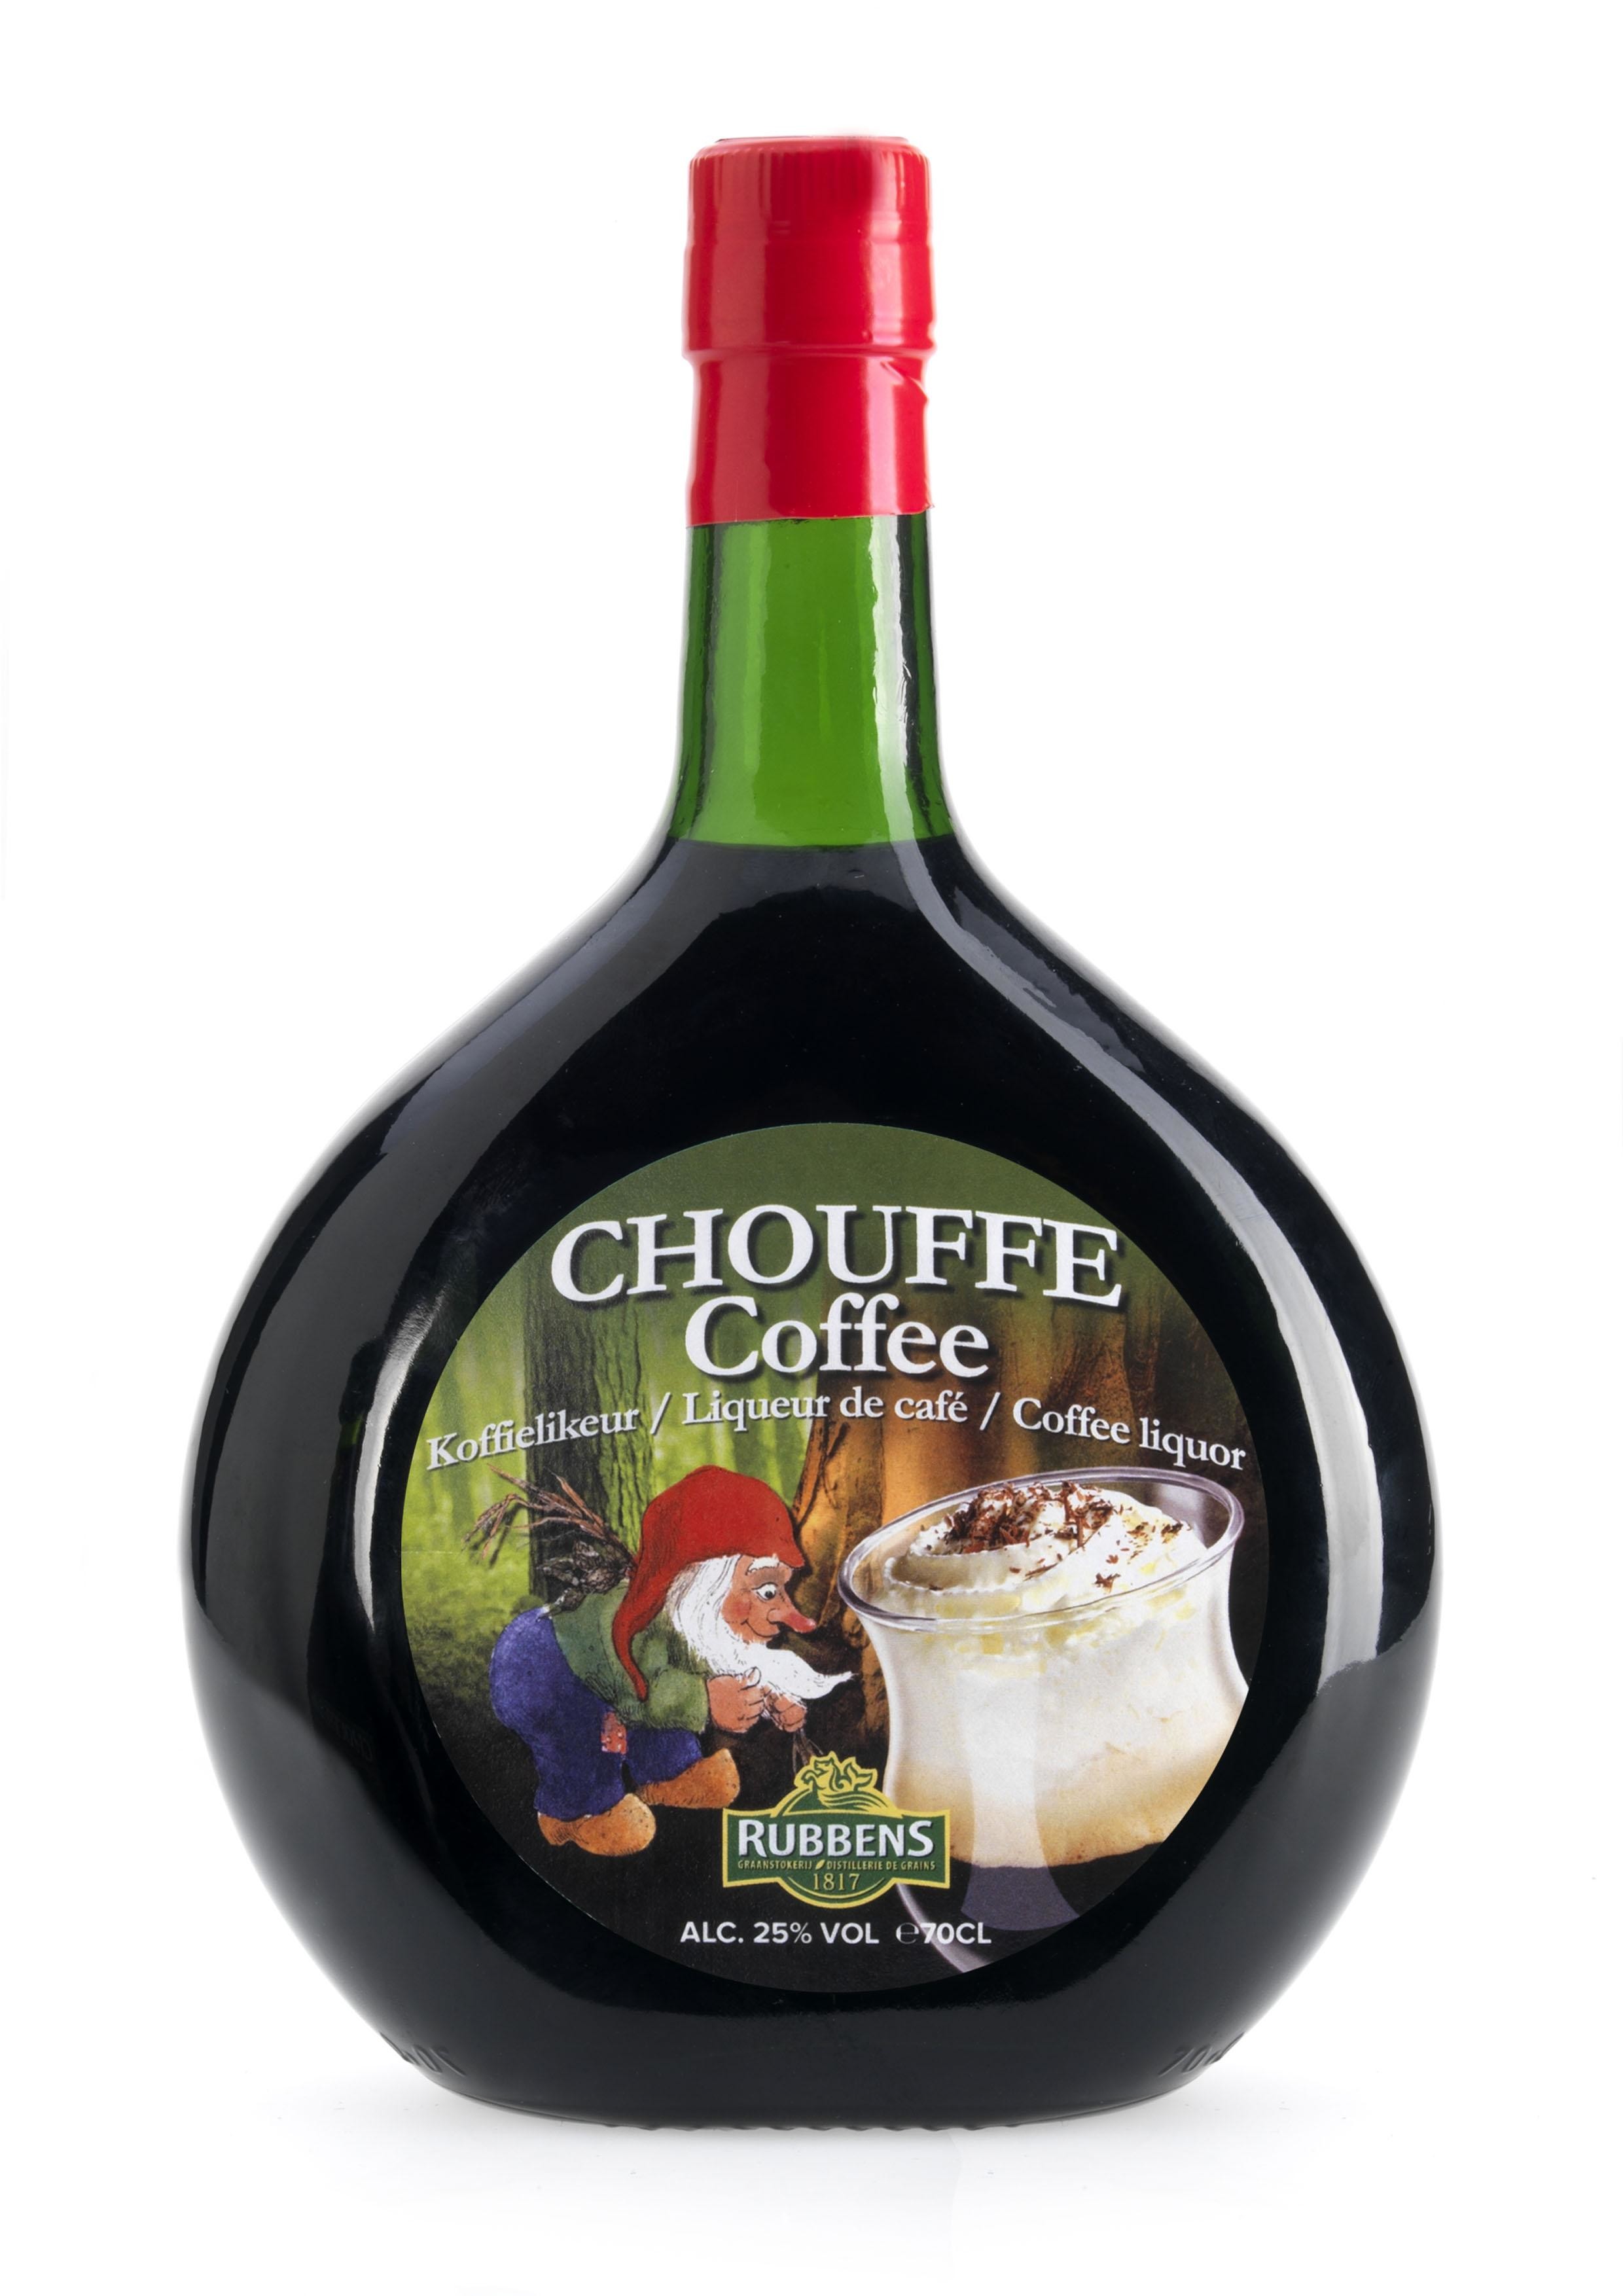 Chouffe Coffee 70cl 20% liqueur de café